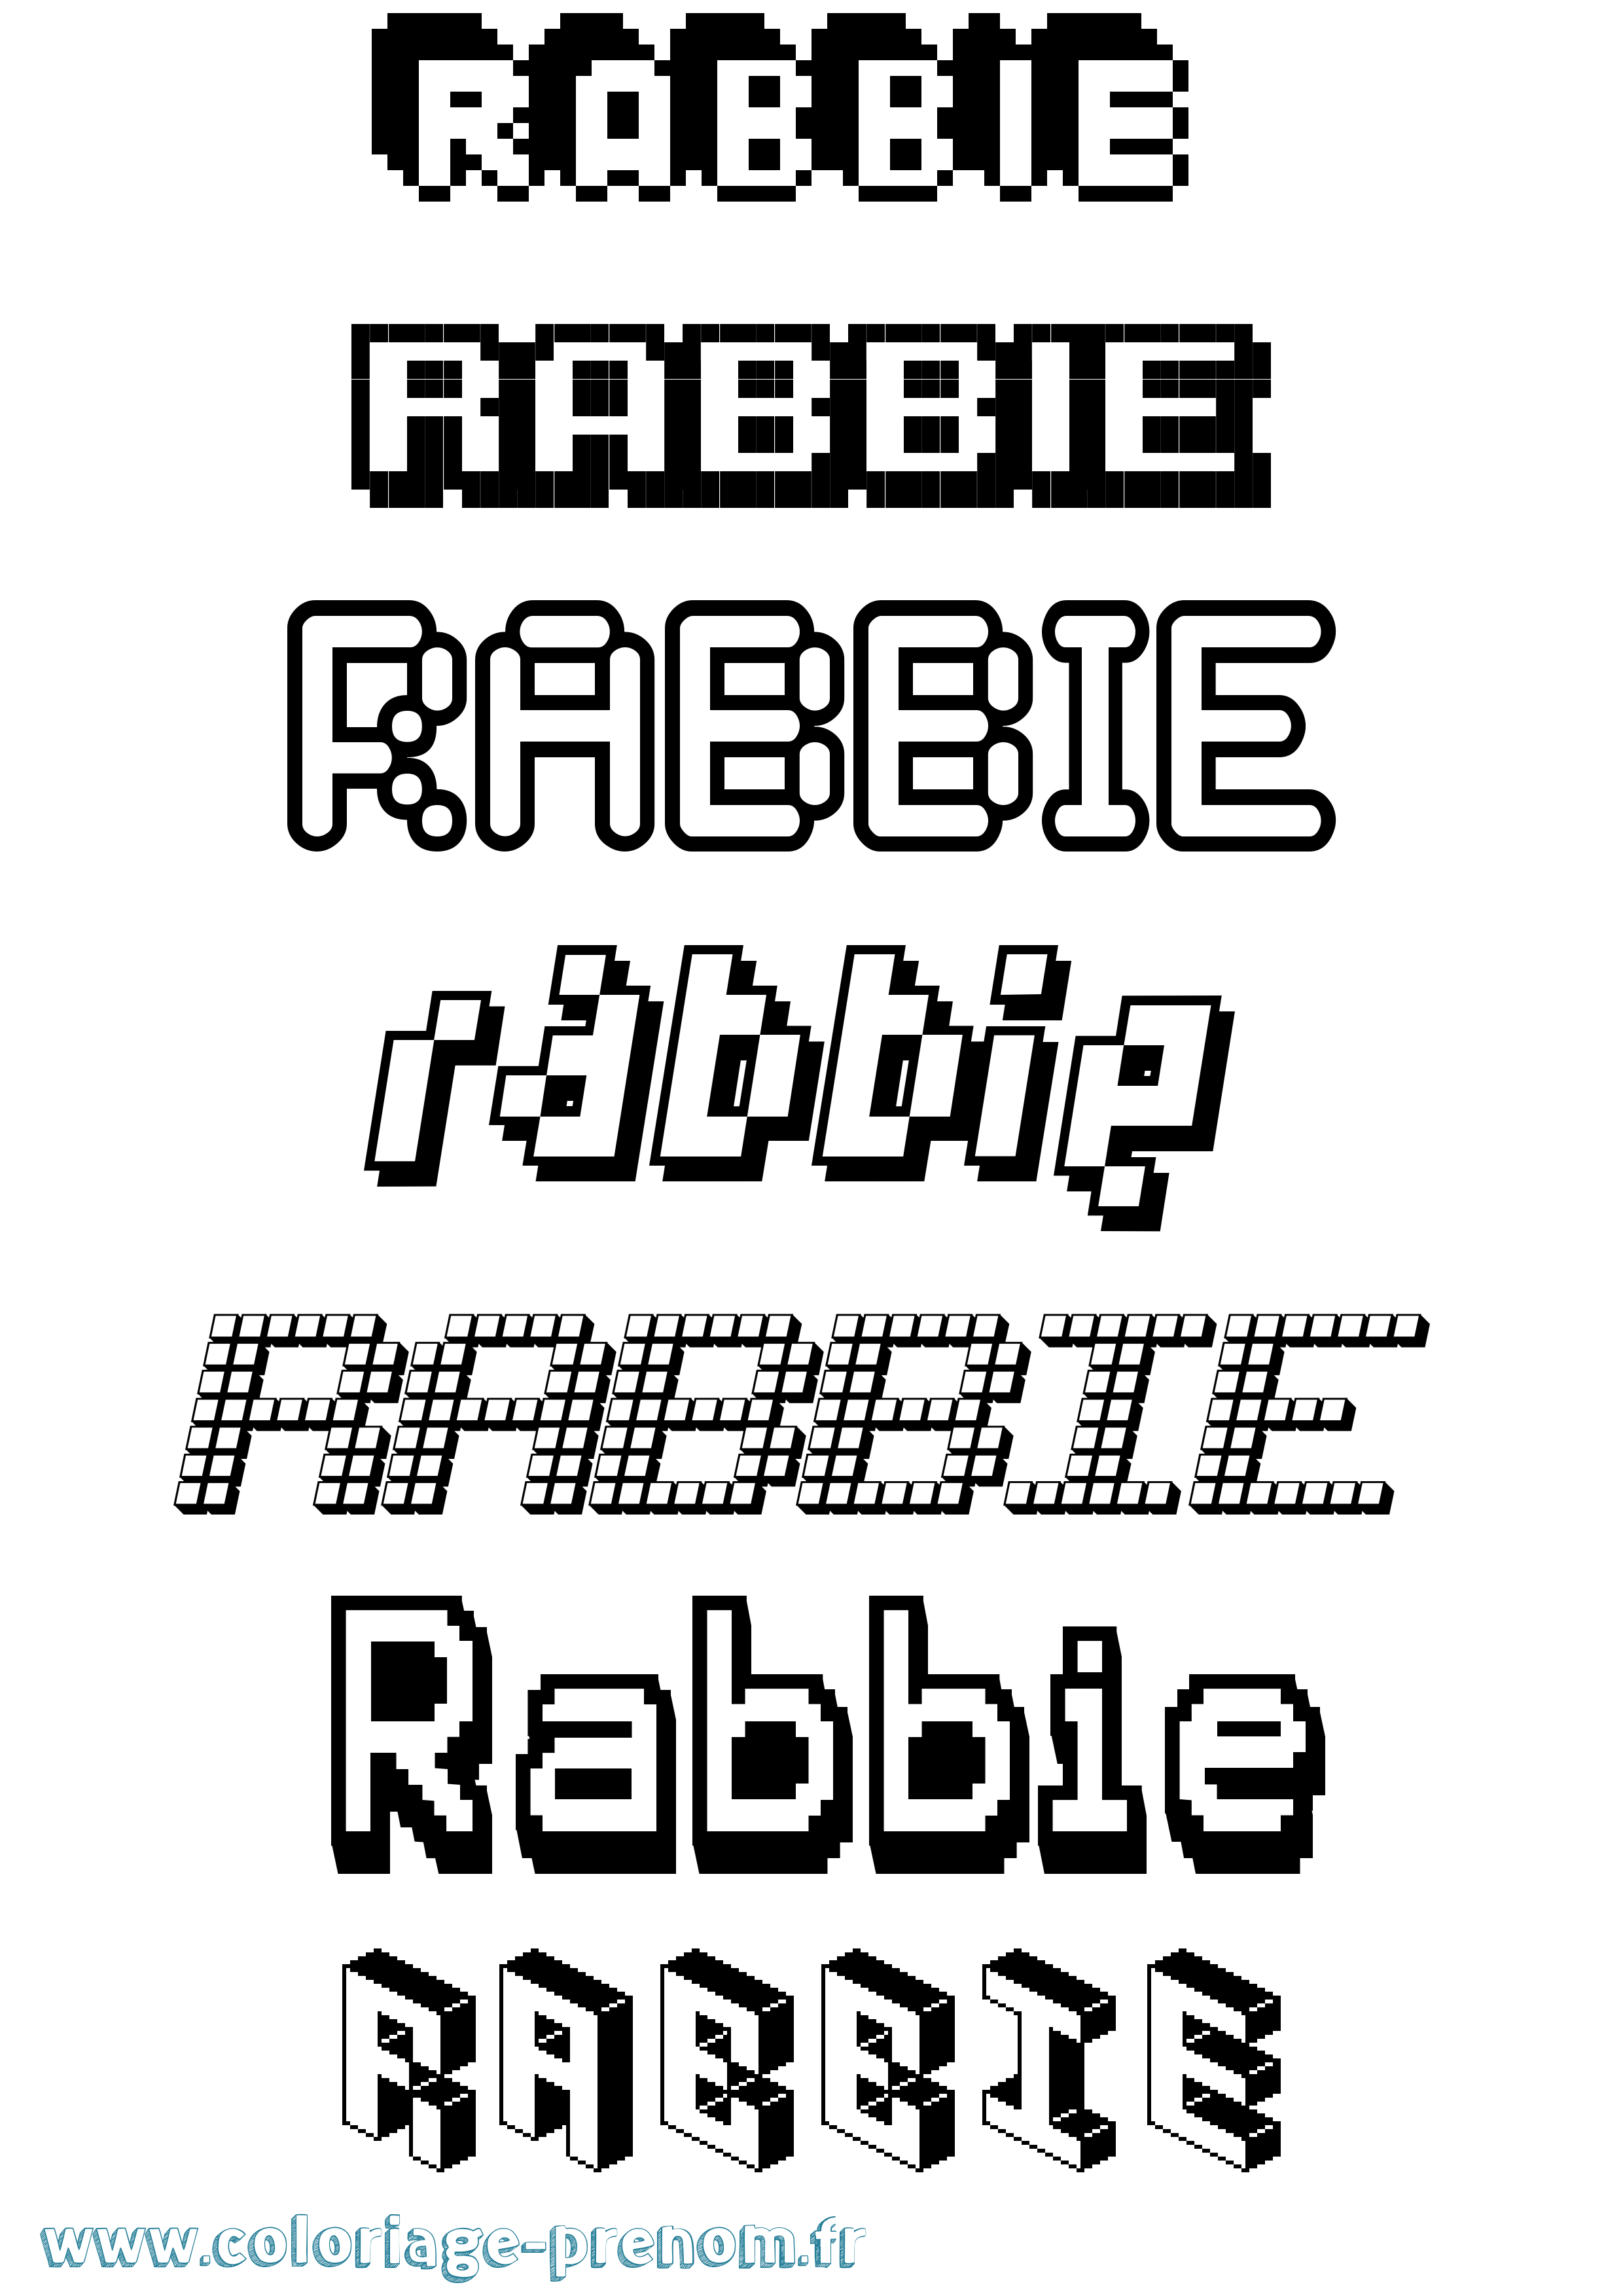 Coloriage prénom Rabbie Pixel